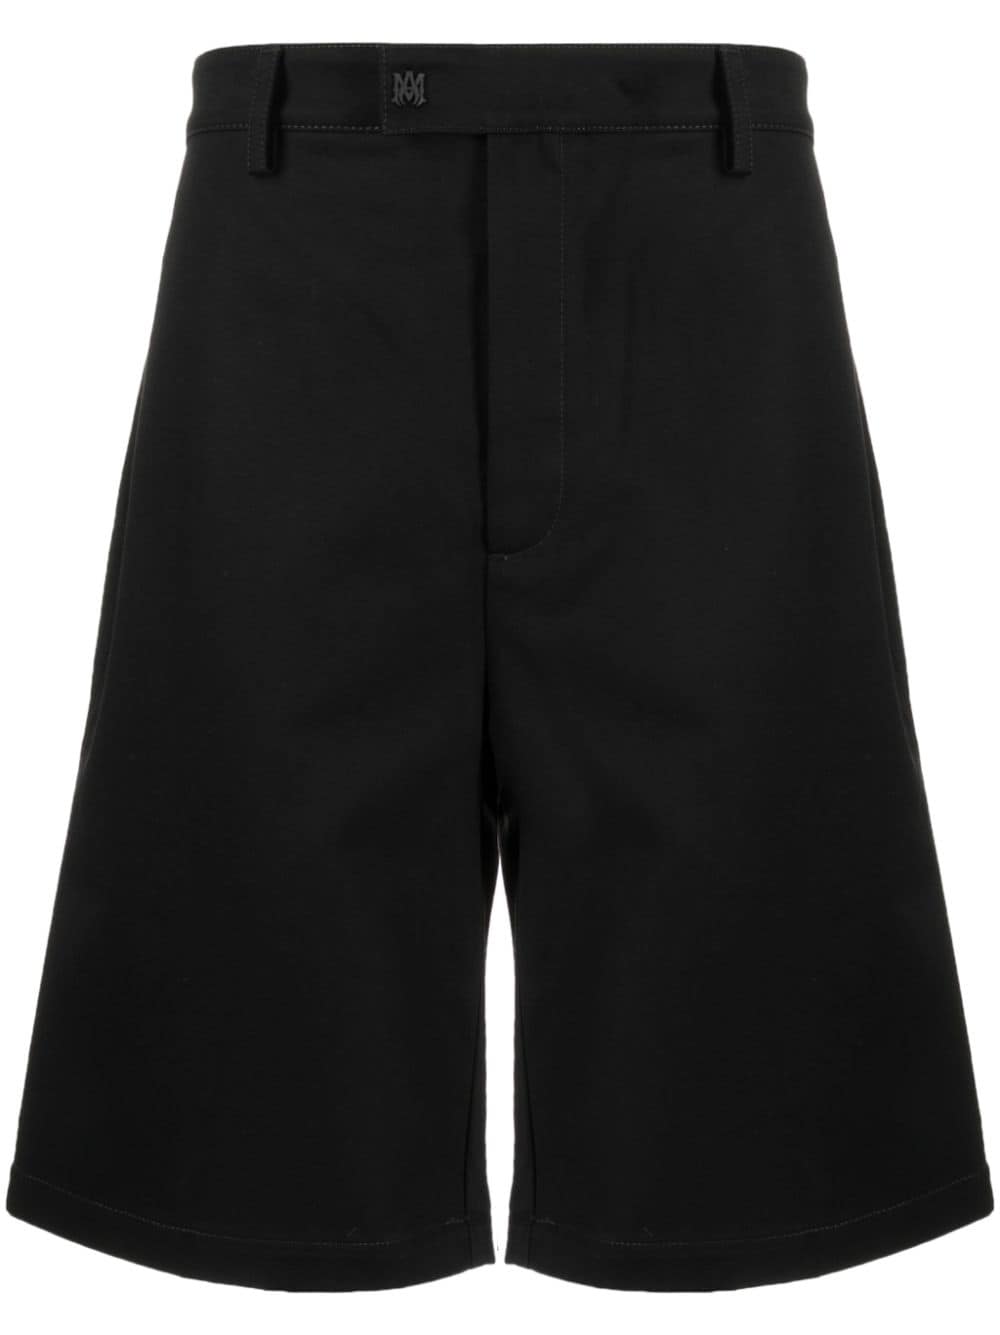 AMIRI Men's Black Cotton Shorts with Embroidered Logo